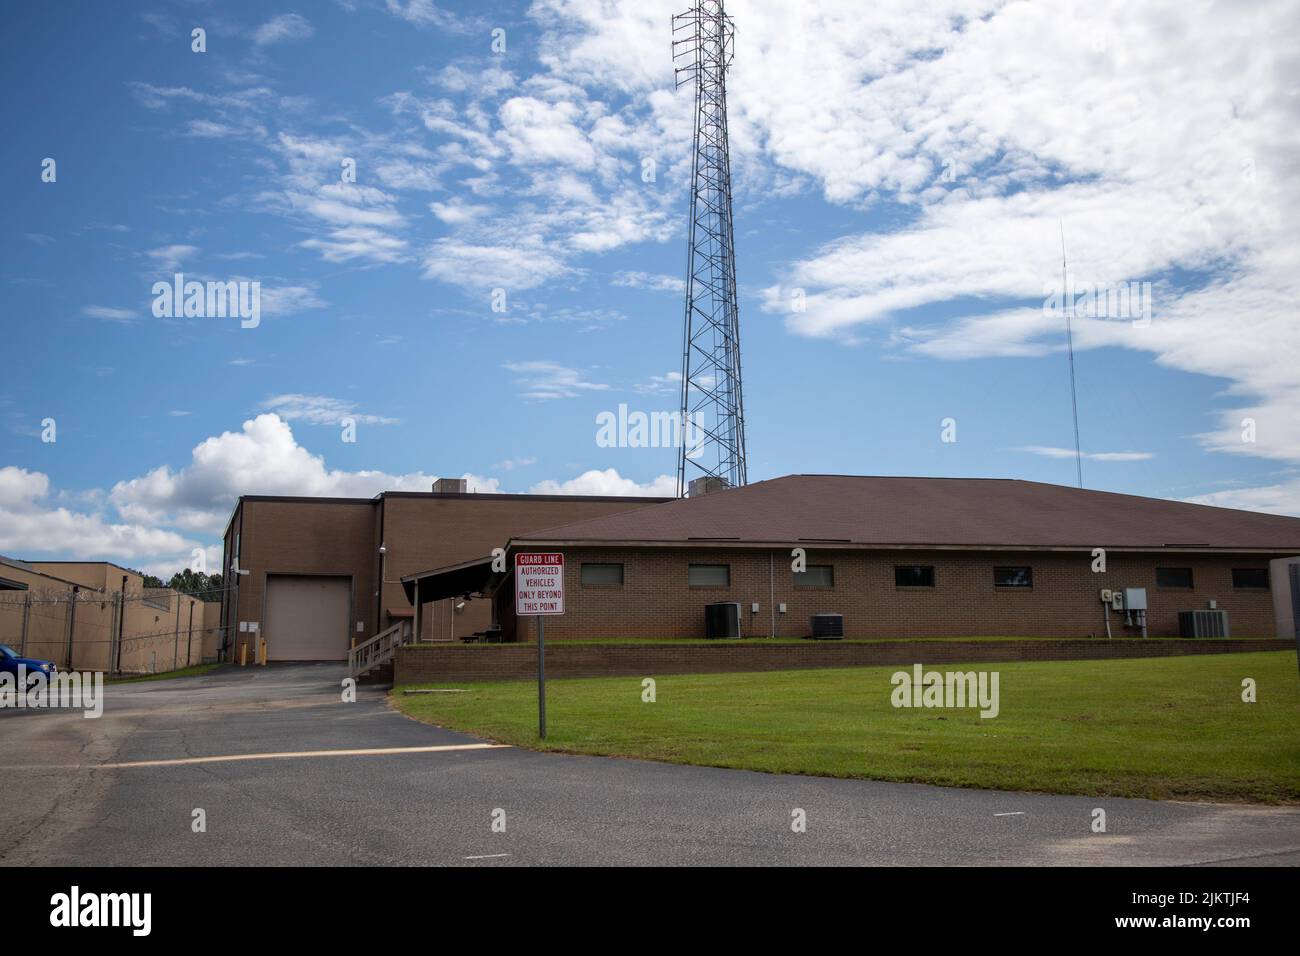 Columbia County, Ga USA - 08 20 21: Columbia County Sheriffs department communications tower Stock Photo